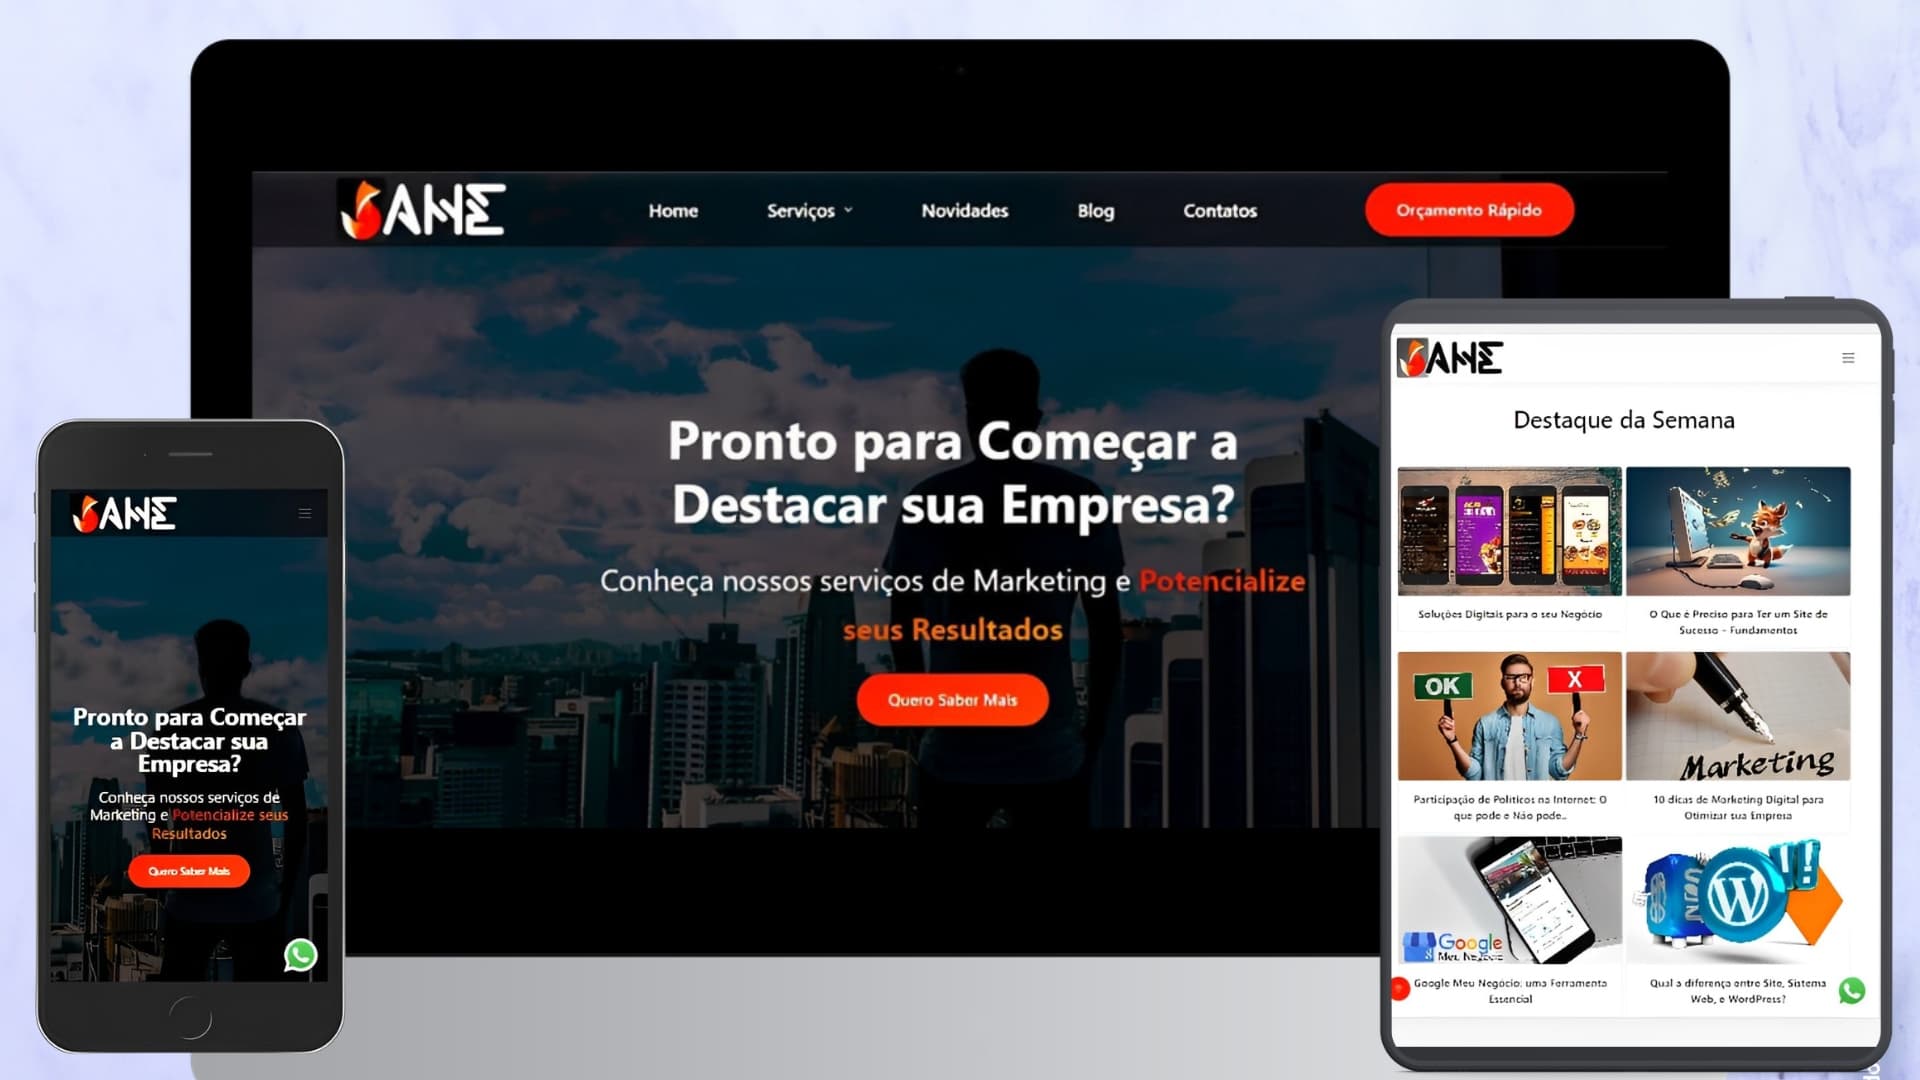 (c) Sahe.com.br